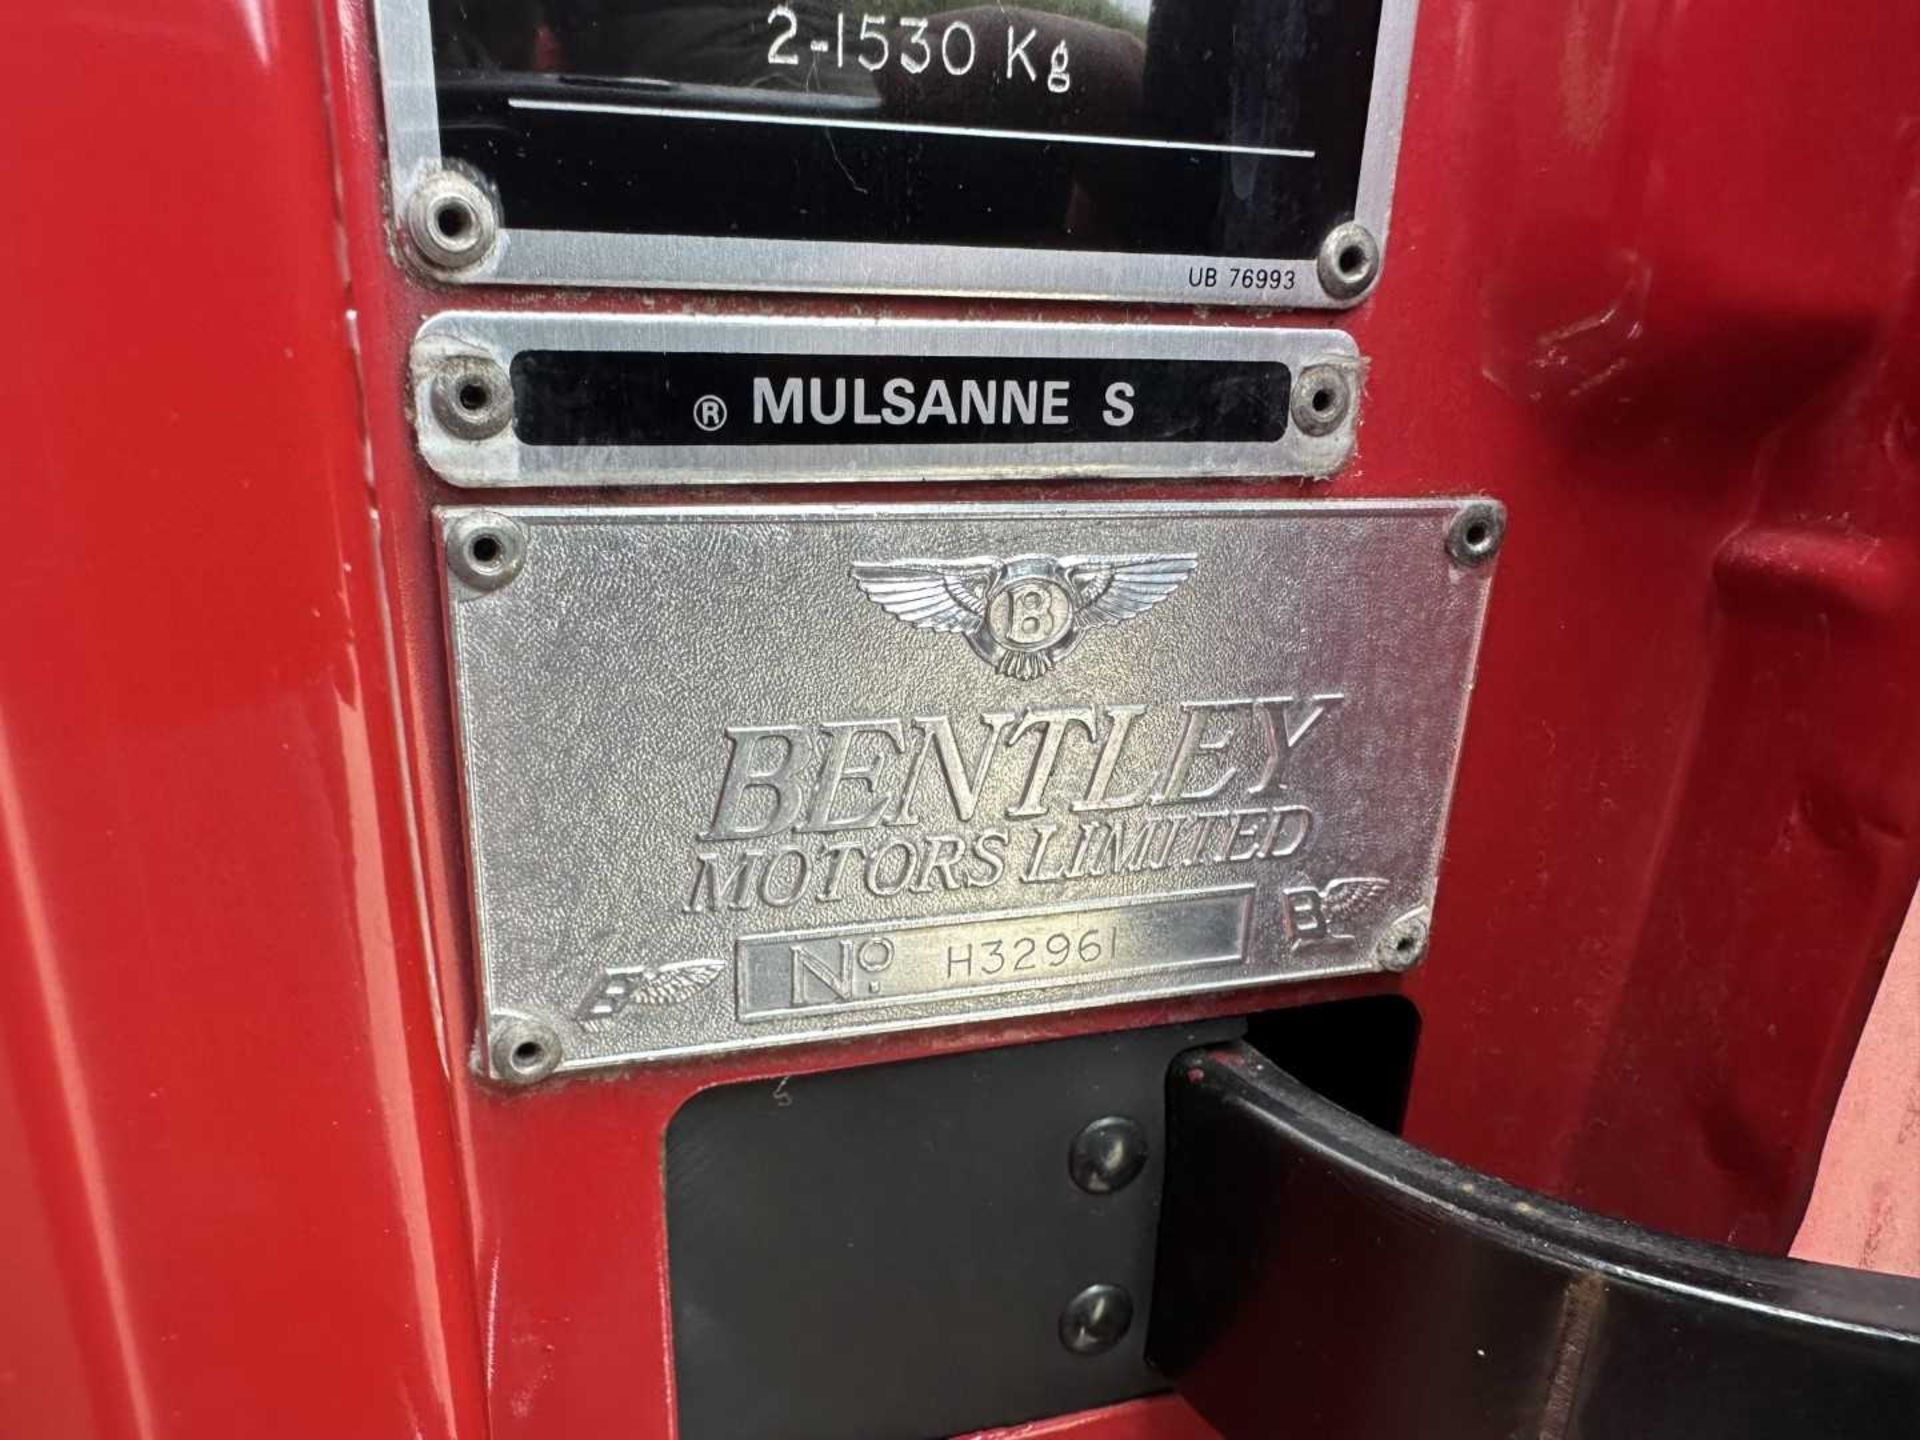 1990 Bentley Mulsanne S saloon, 6.75 litre V8, automatic, reg. no. G269 OKY. - Image 31 of 40